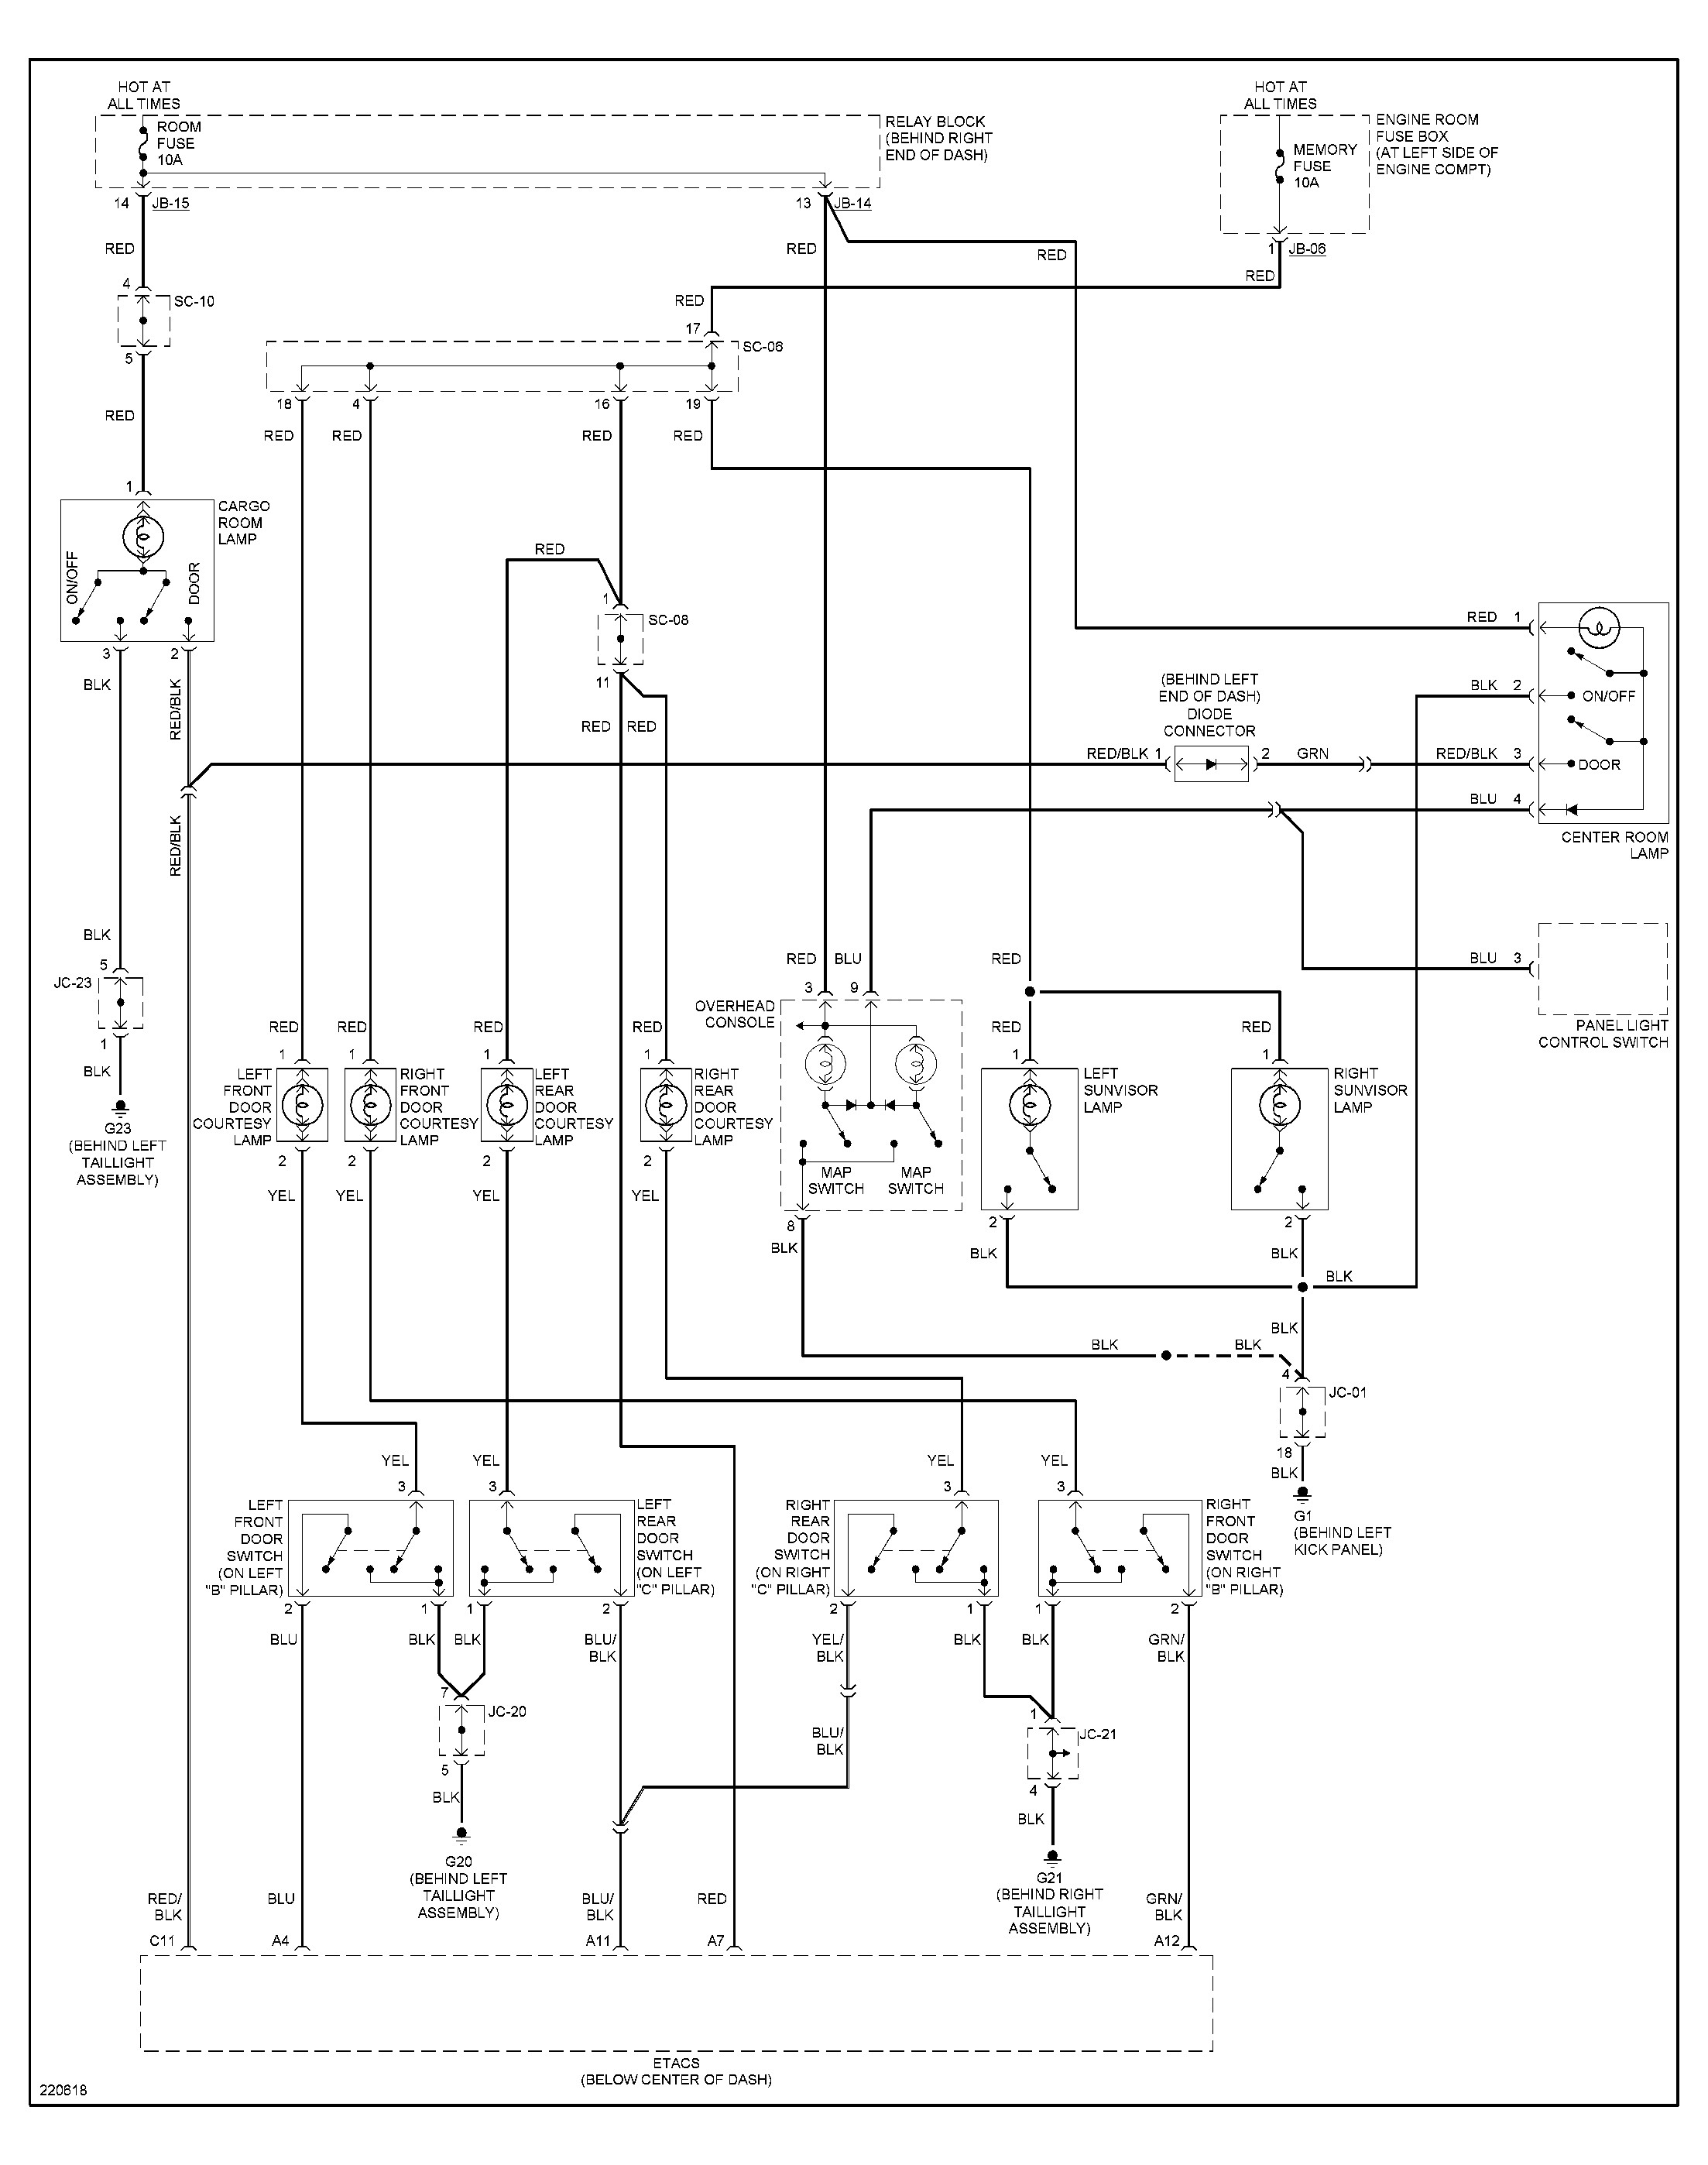 Famous Kia soul Wiring Diagrams Inspiration Electrical Circuit Kia sorento Wiring Schematic Library Wiring Diagram